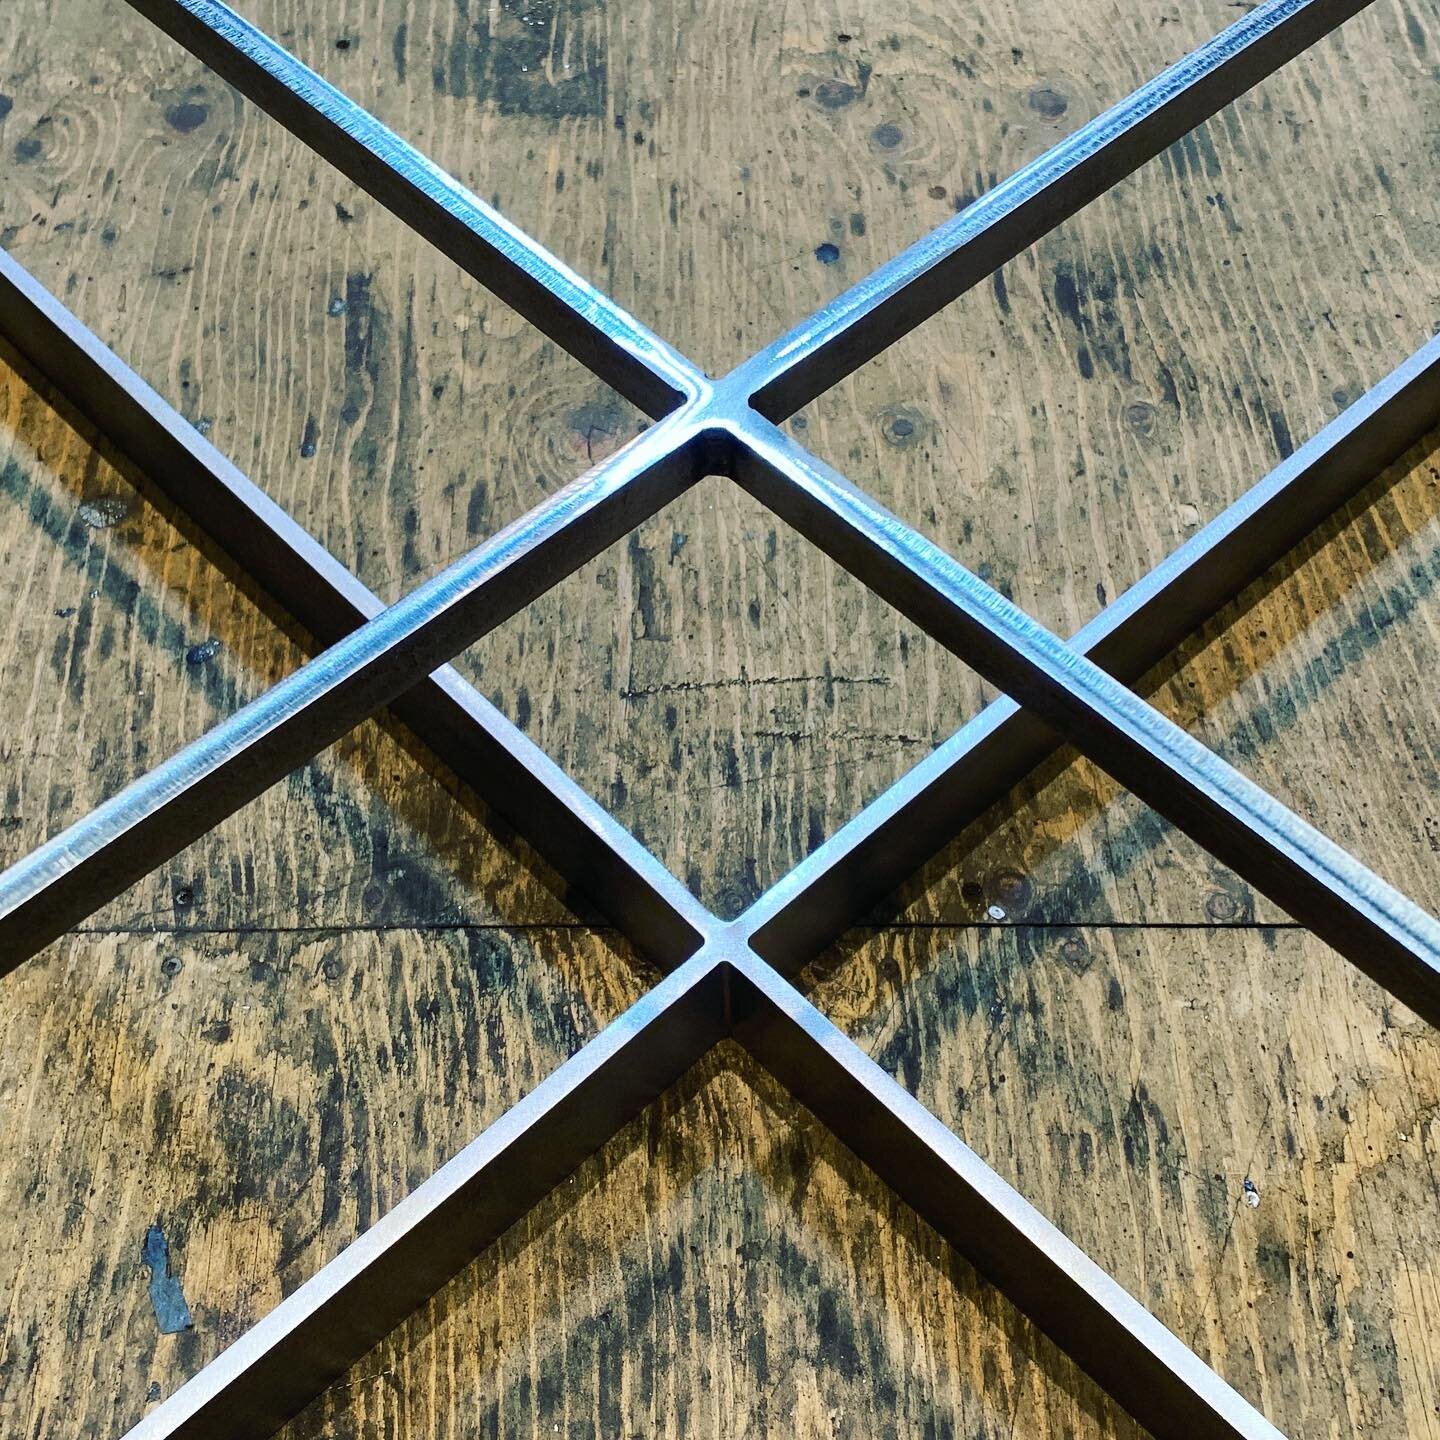 Custom coffee table base made from laser cut 3/8 plate steel and TIG welded.
.
.
.
.
#metal #design #furnituredesign #industrialdesign #tig #weldingporn #laser #fabrication #stackeddimes #madeincanada #torontolife